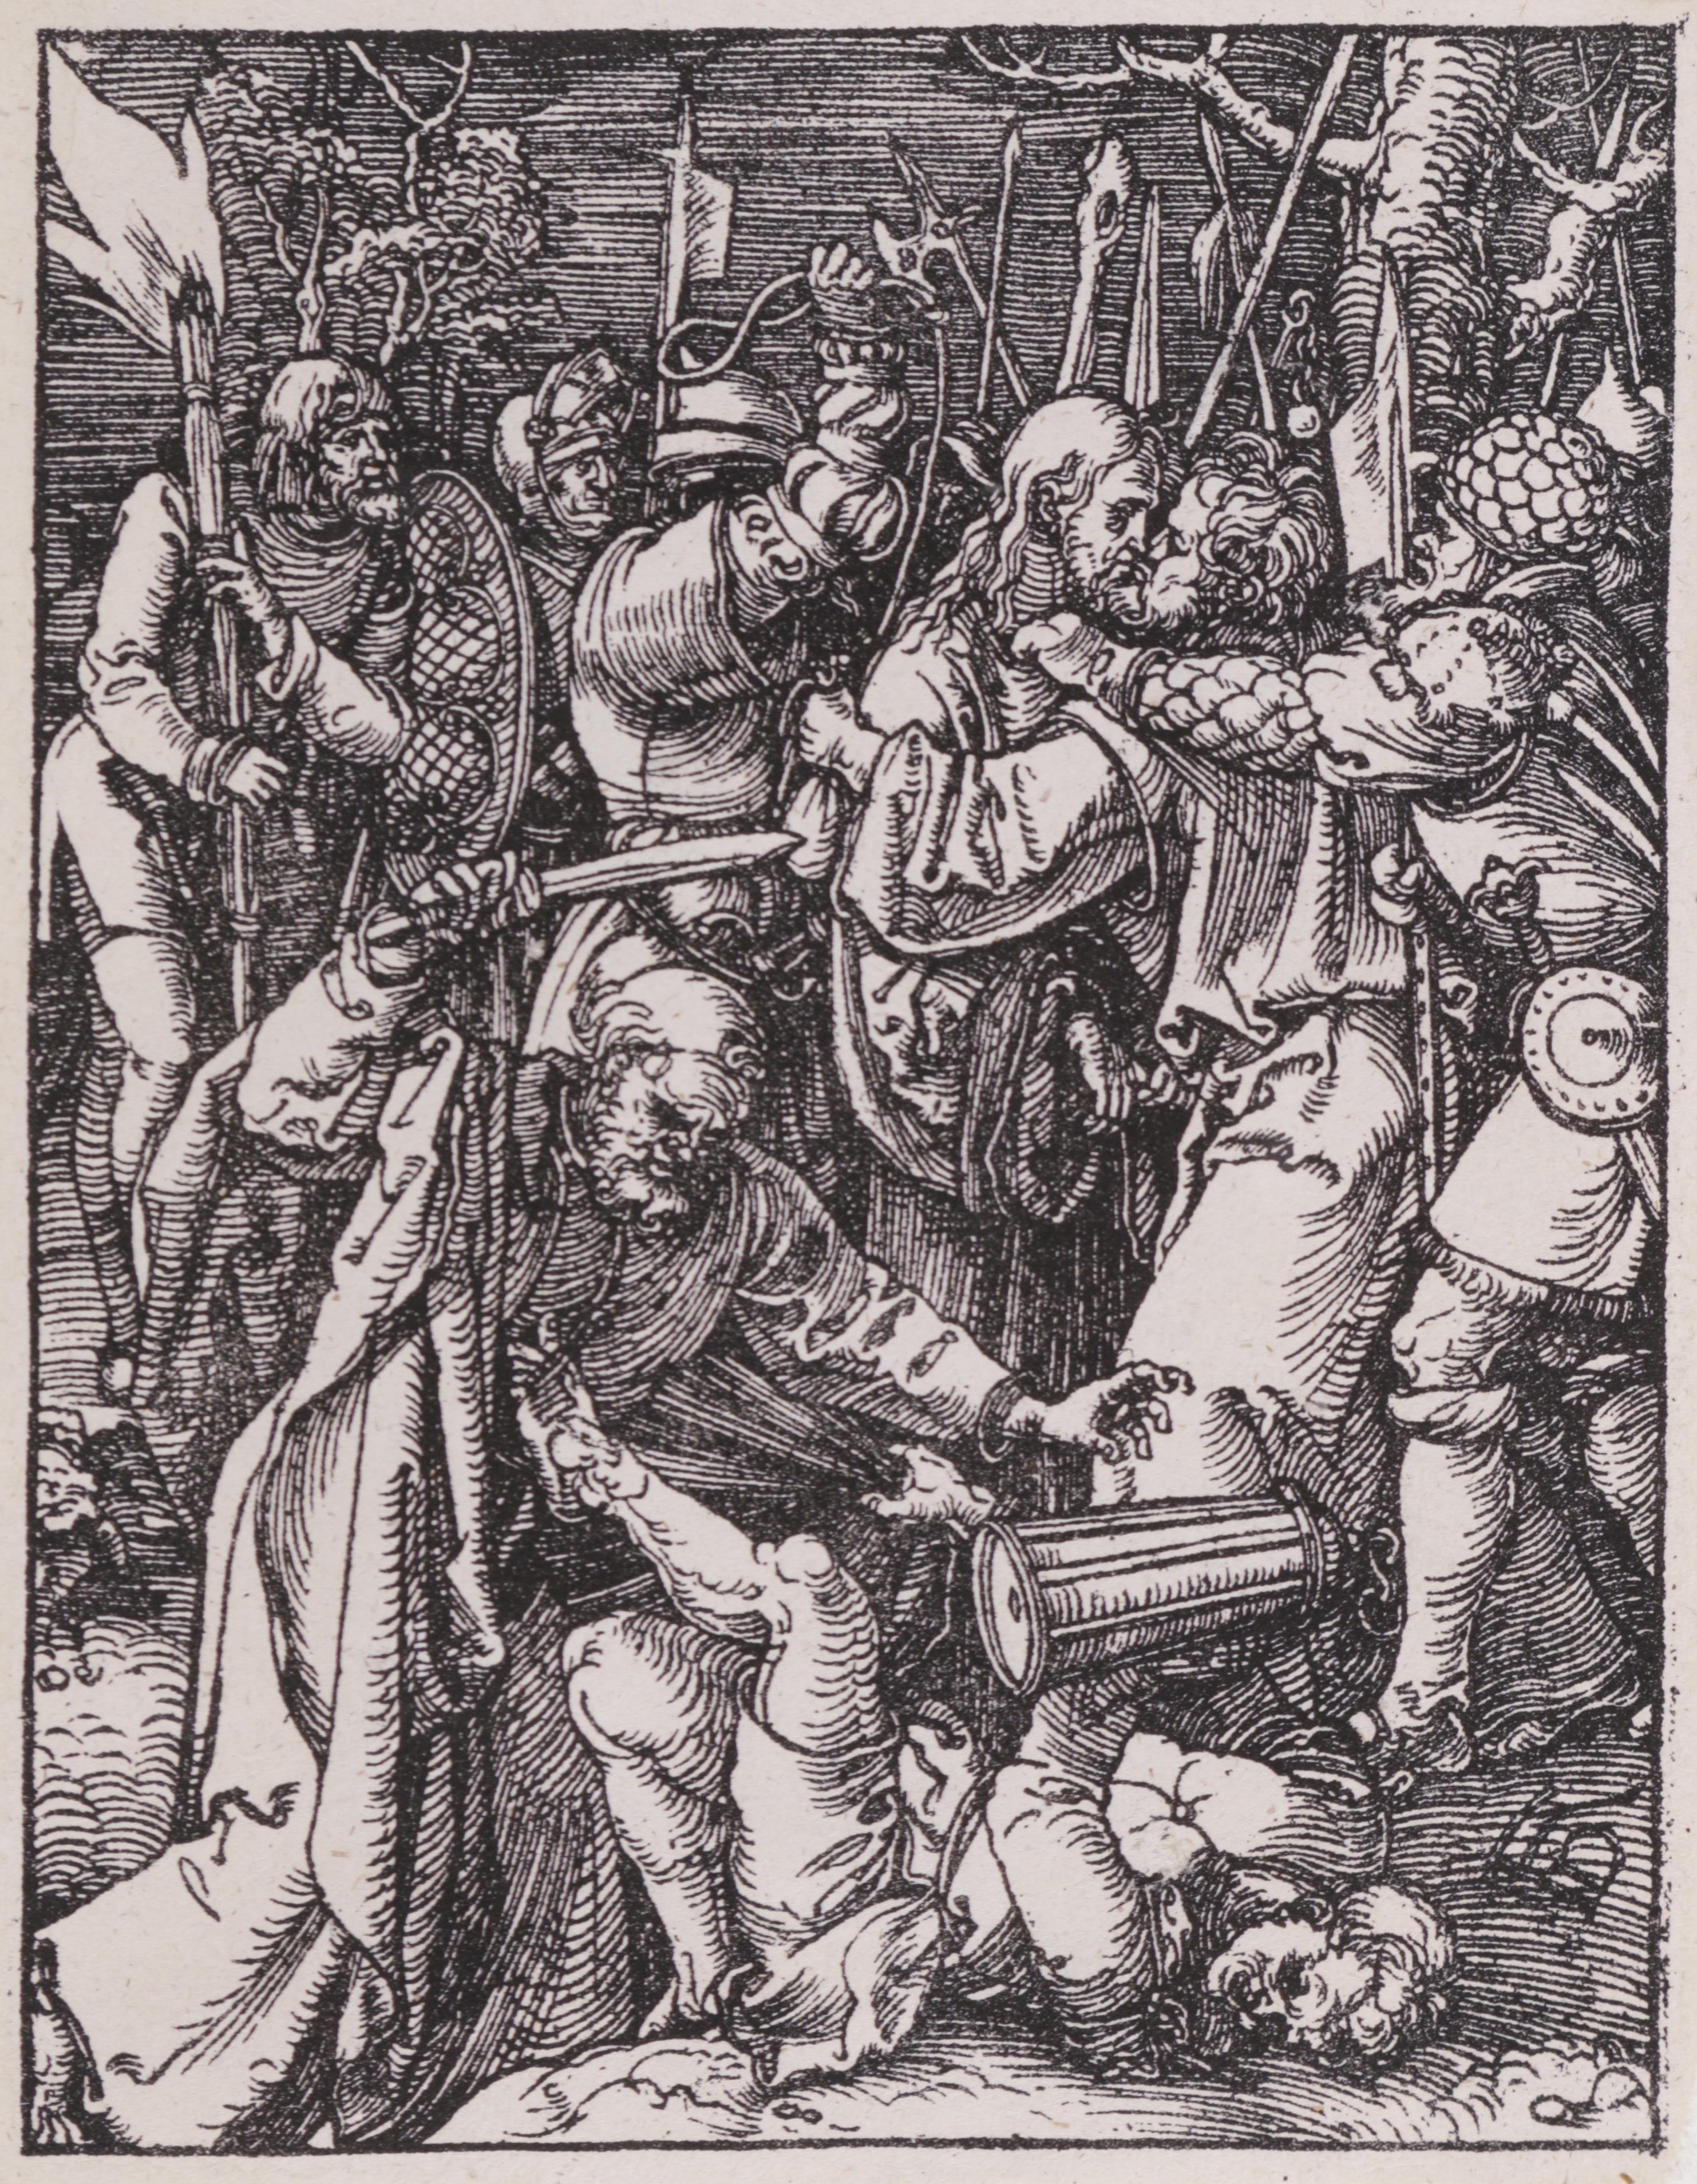 Gefangennahme Christi by Albrecht Dürer, 1509